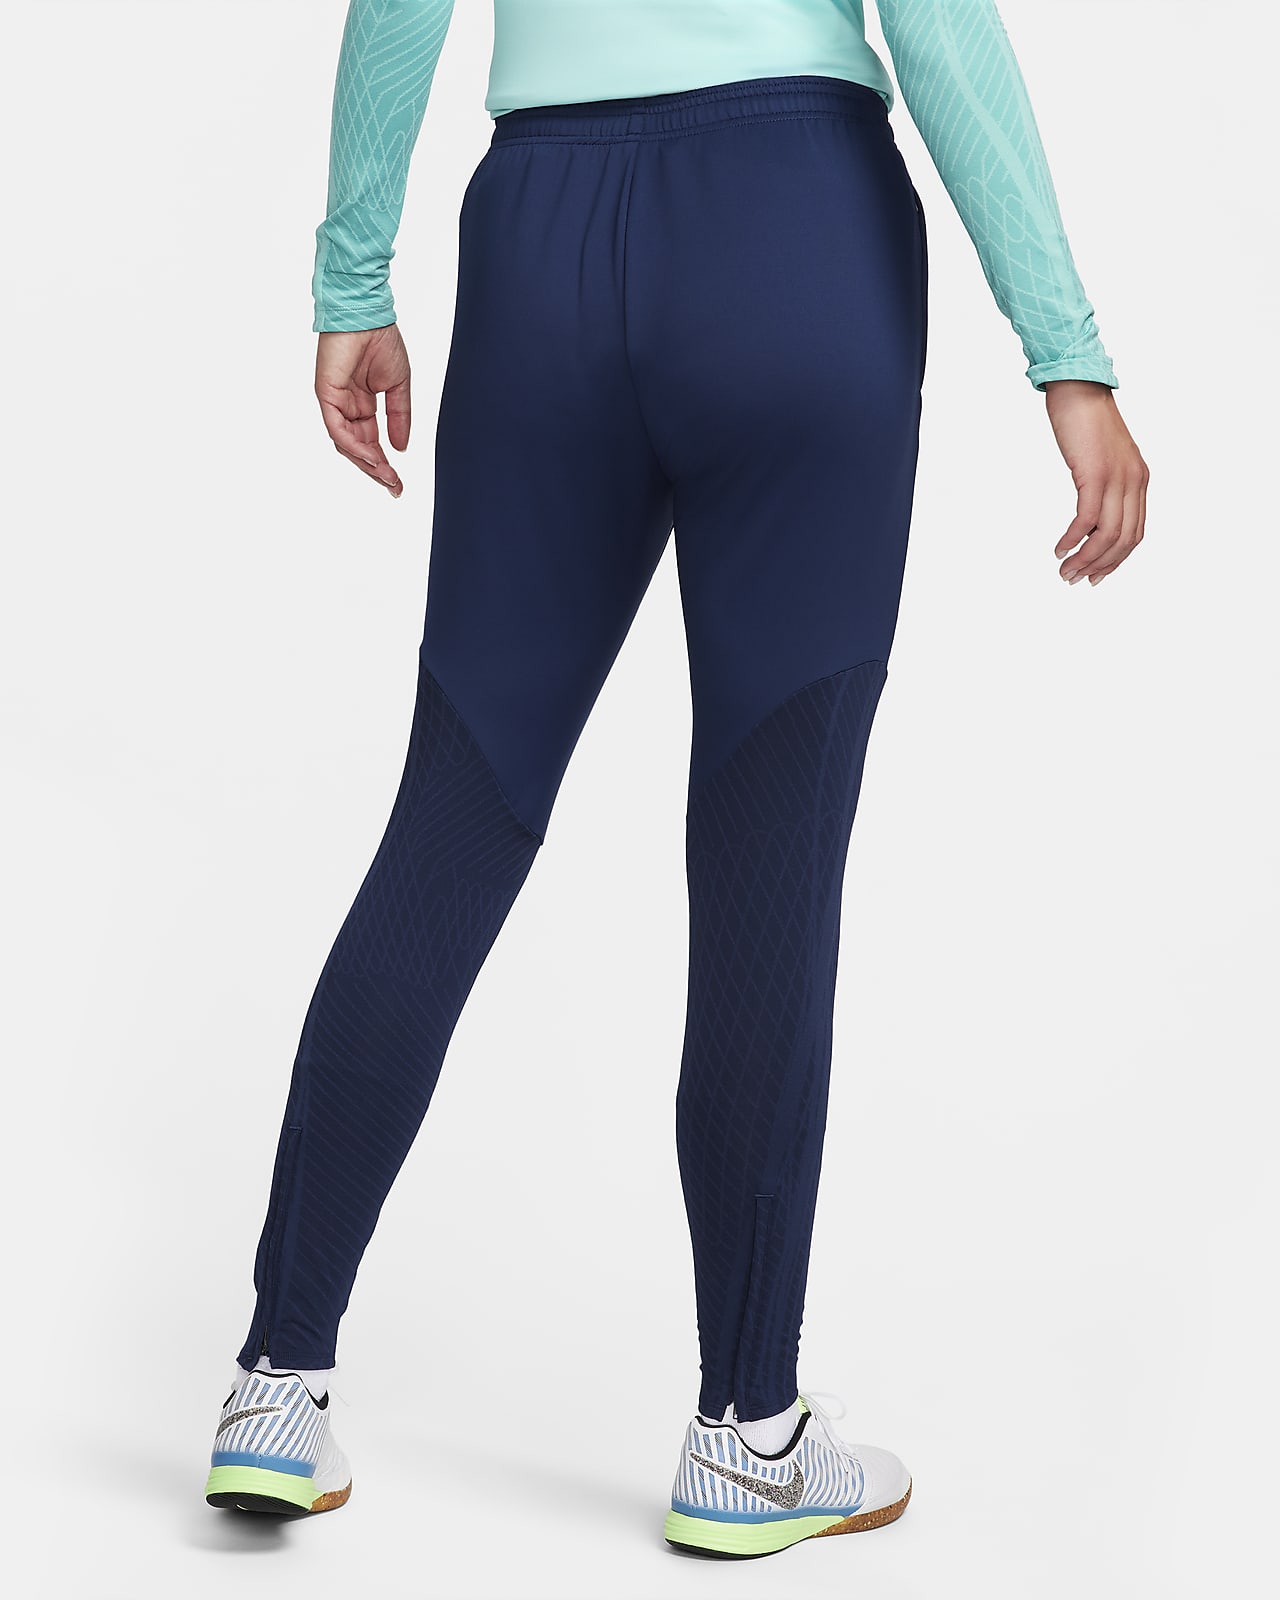 Nike Dri Fit Running Training Pants Black Pockets Athletic Women's